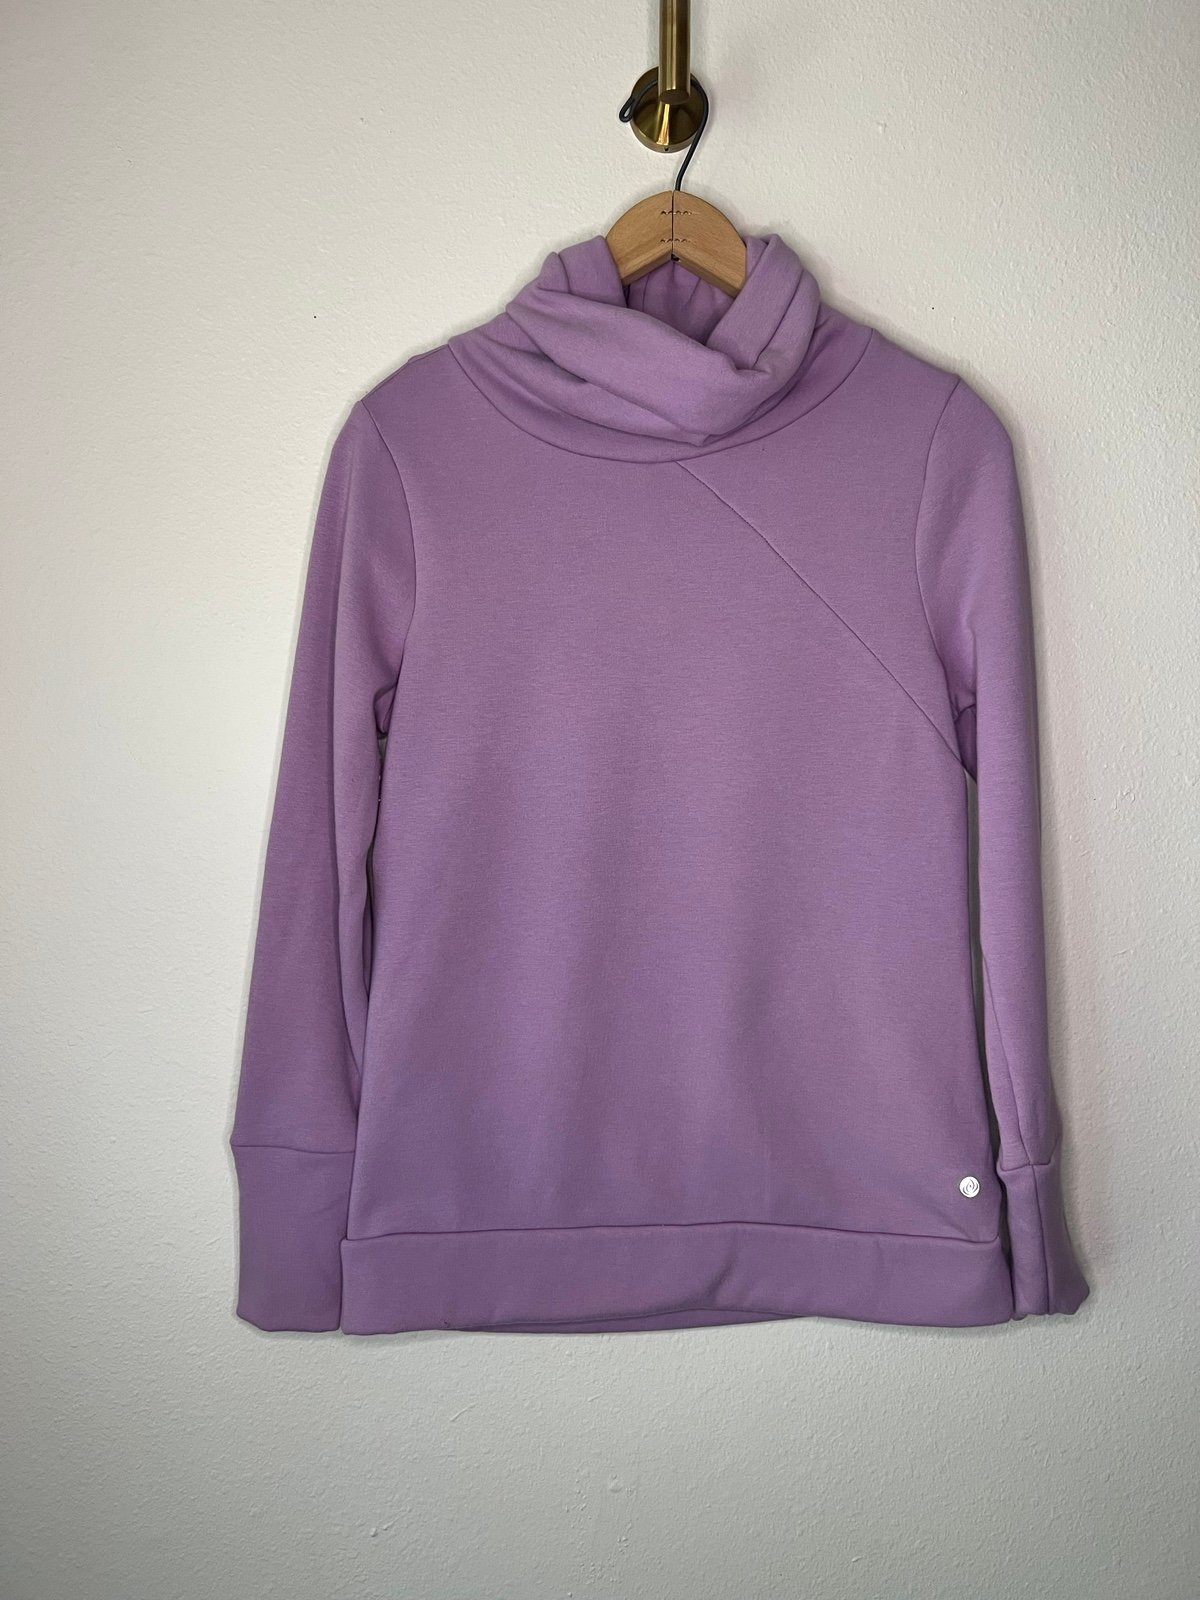 Authentic Apana Light Purple Sweatshirt size S M1Zm02odM US Sale